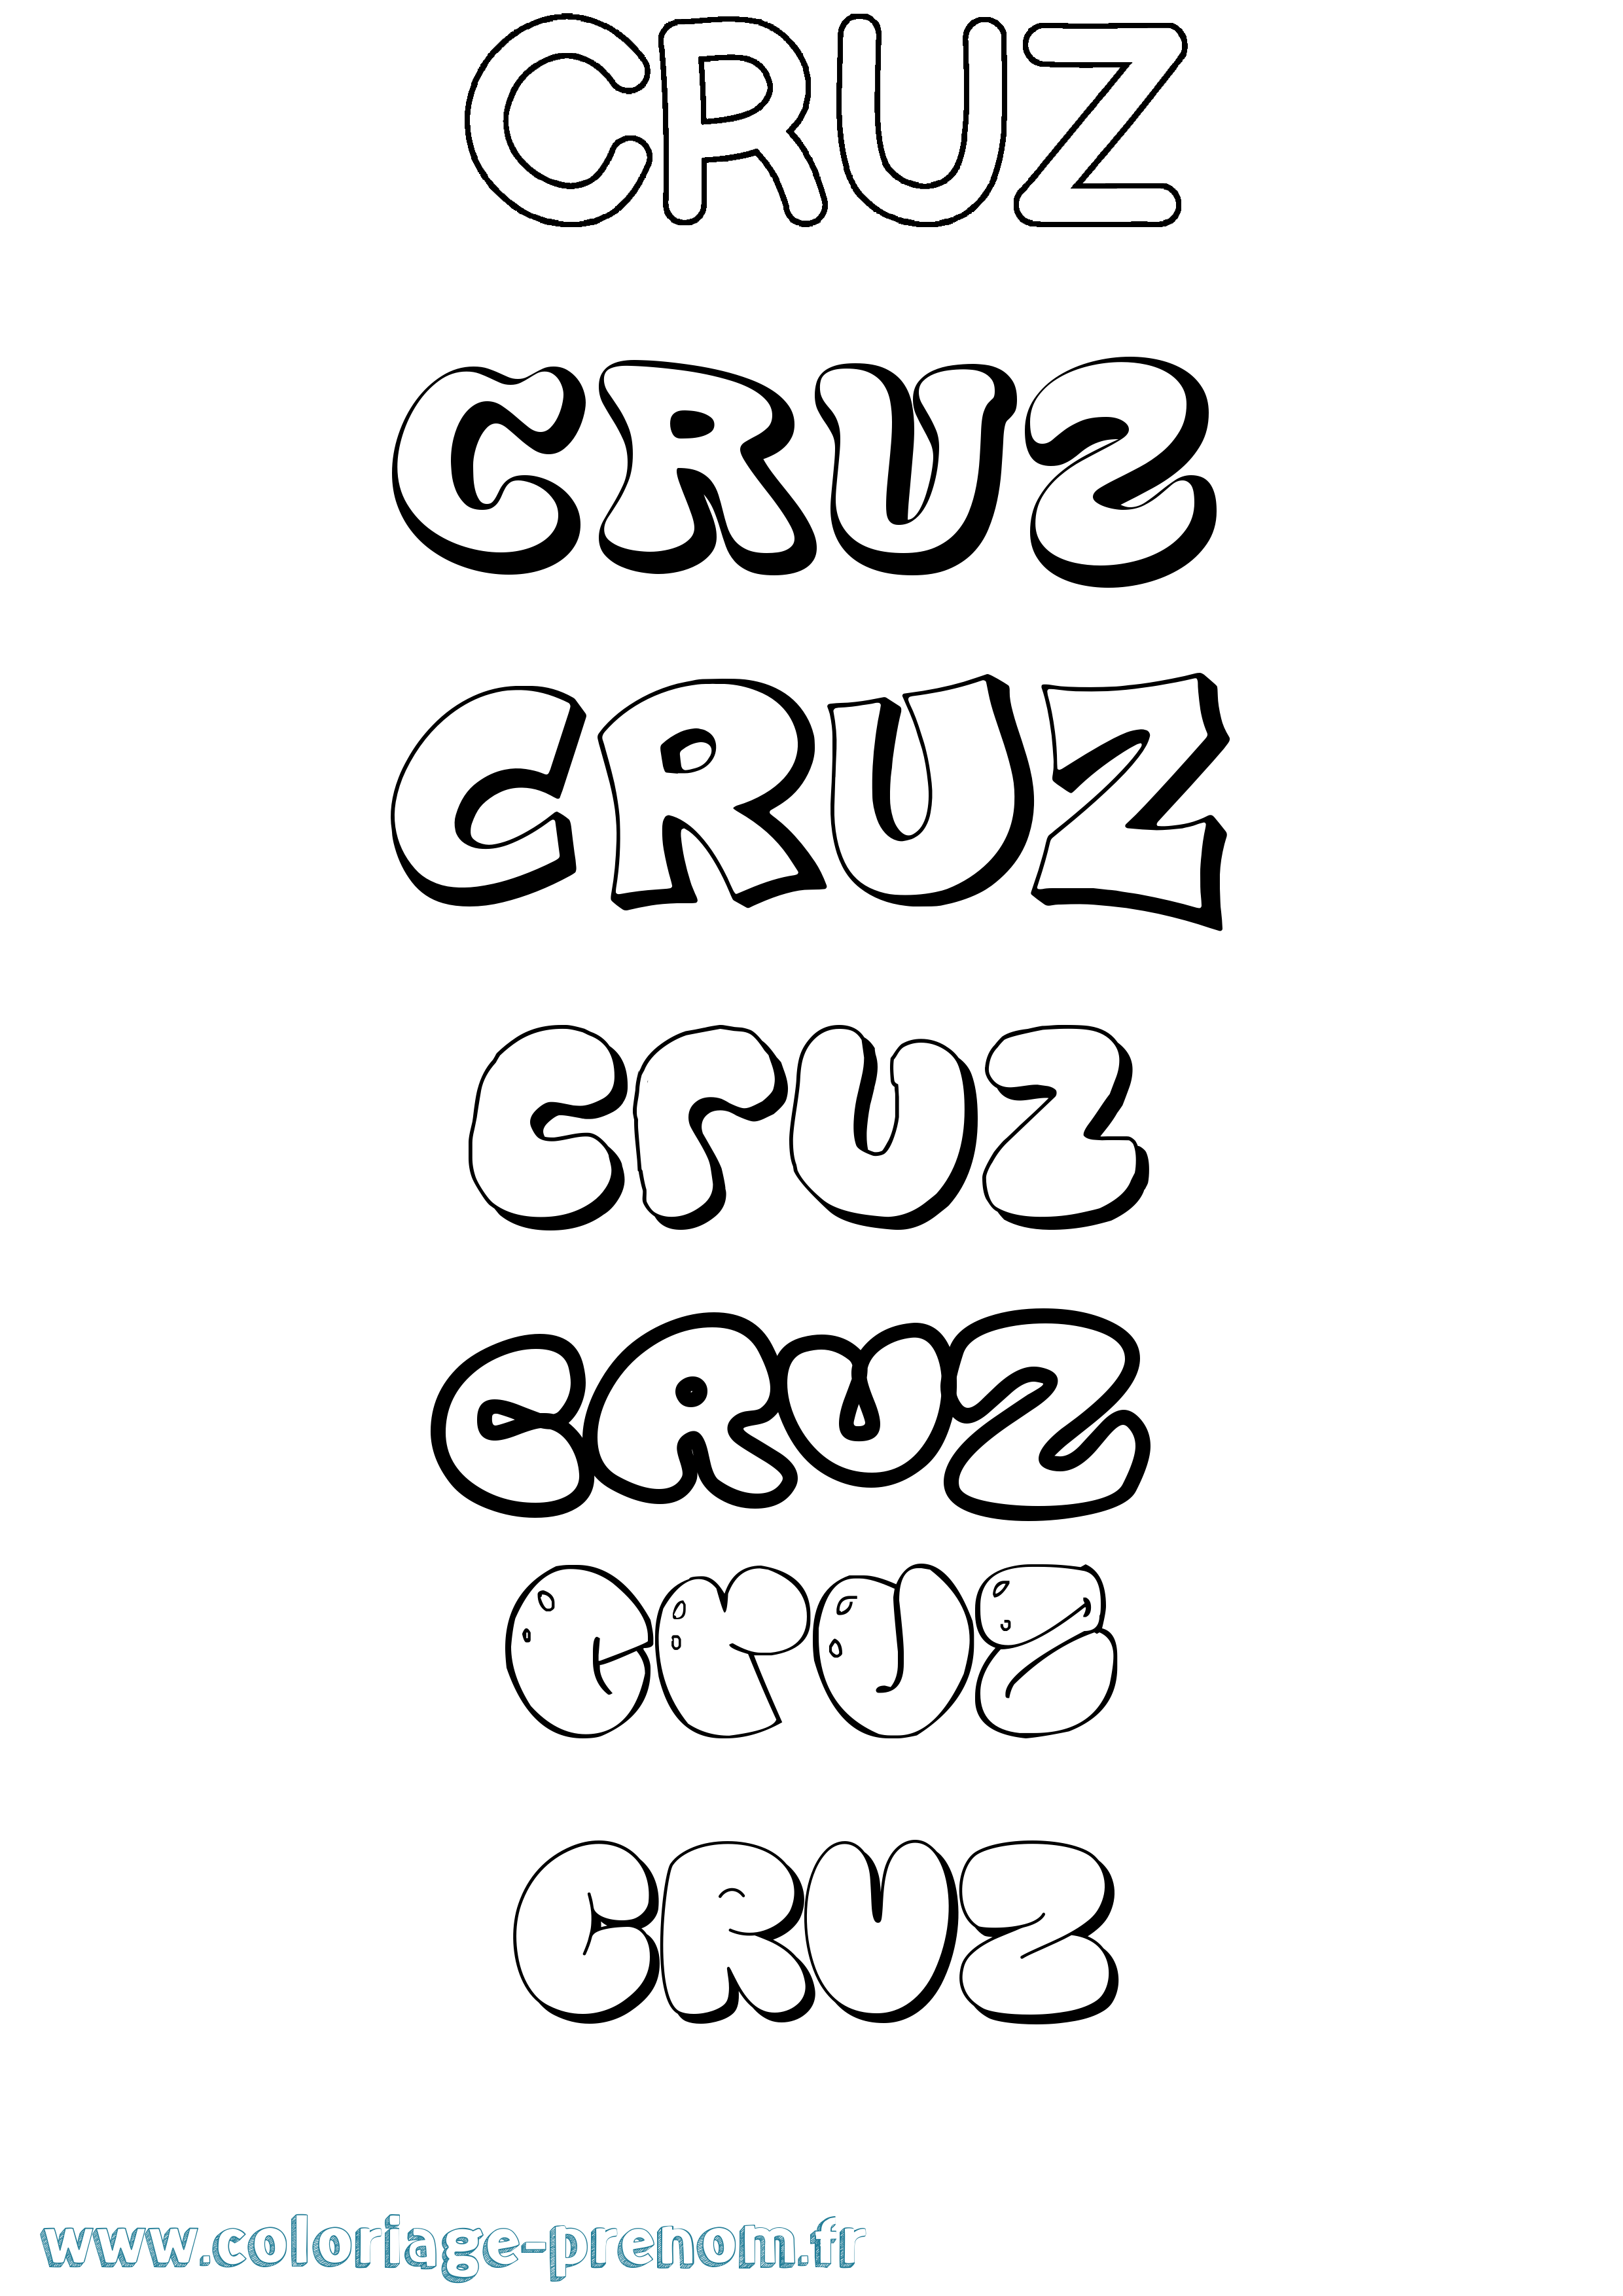 Coloriage prénom Cruz Bubble